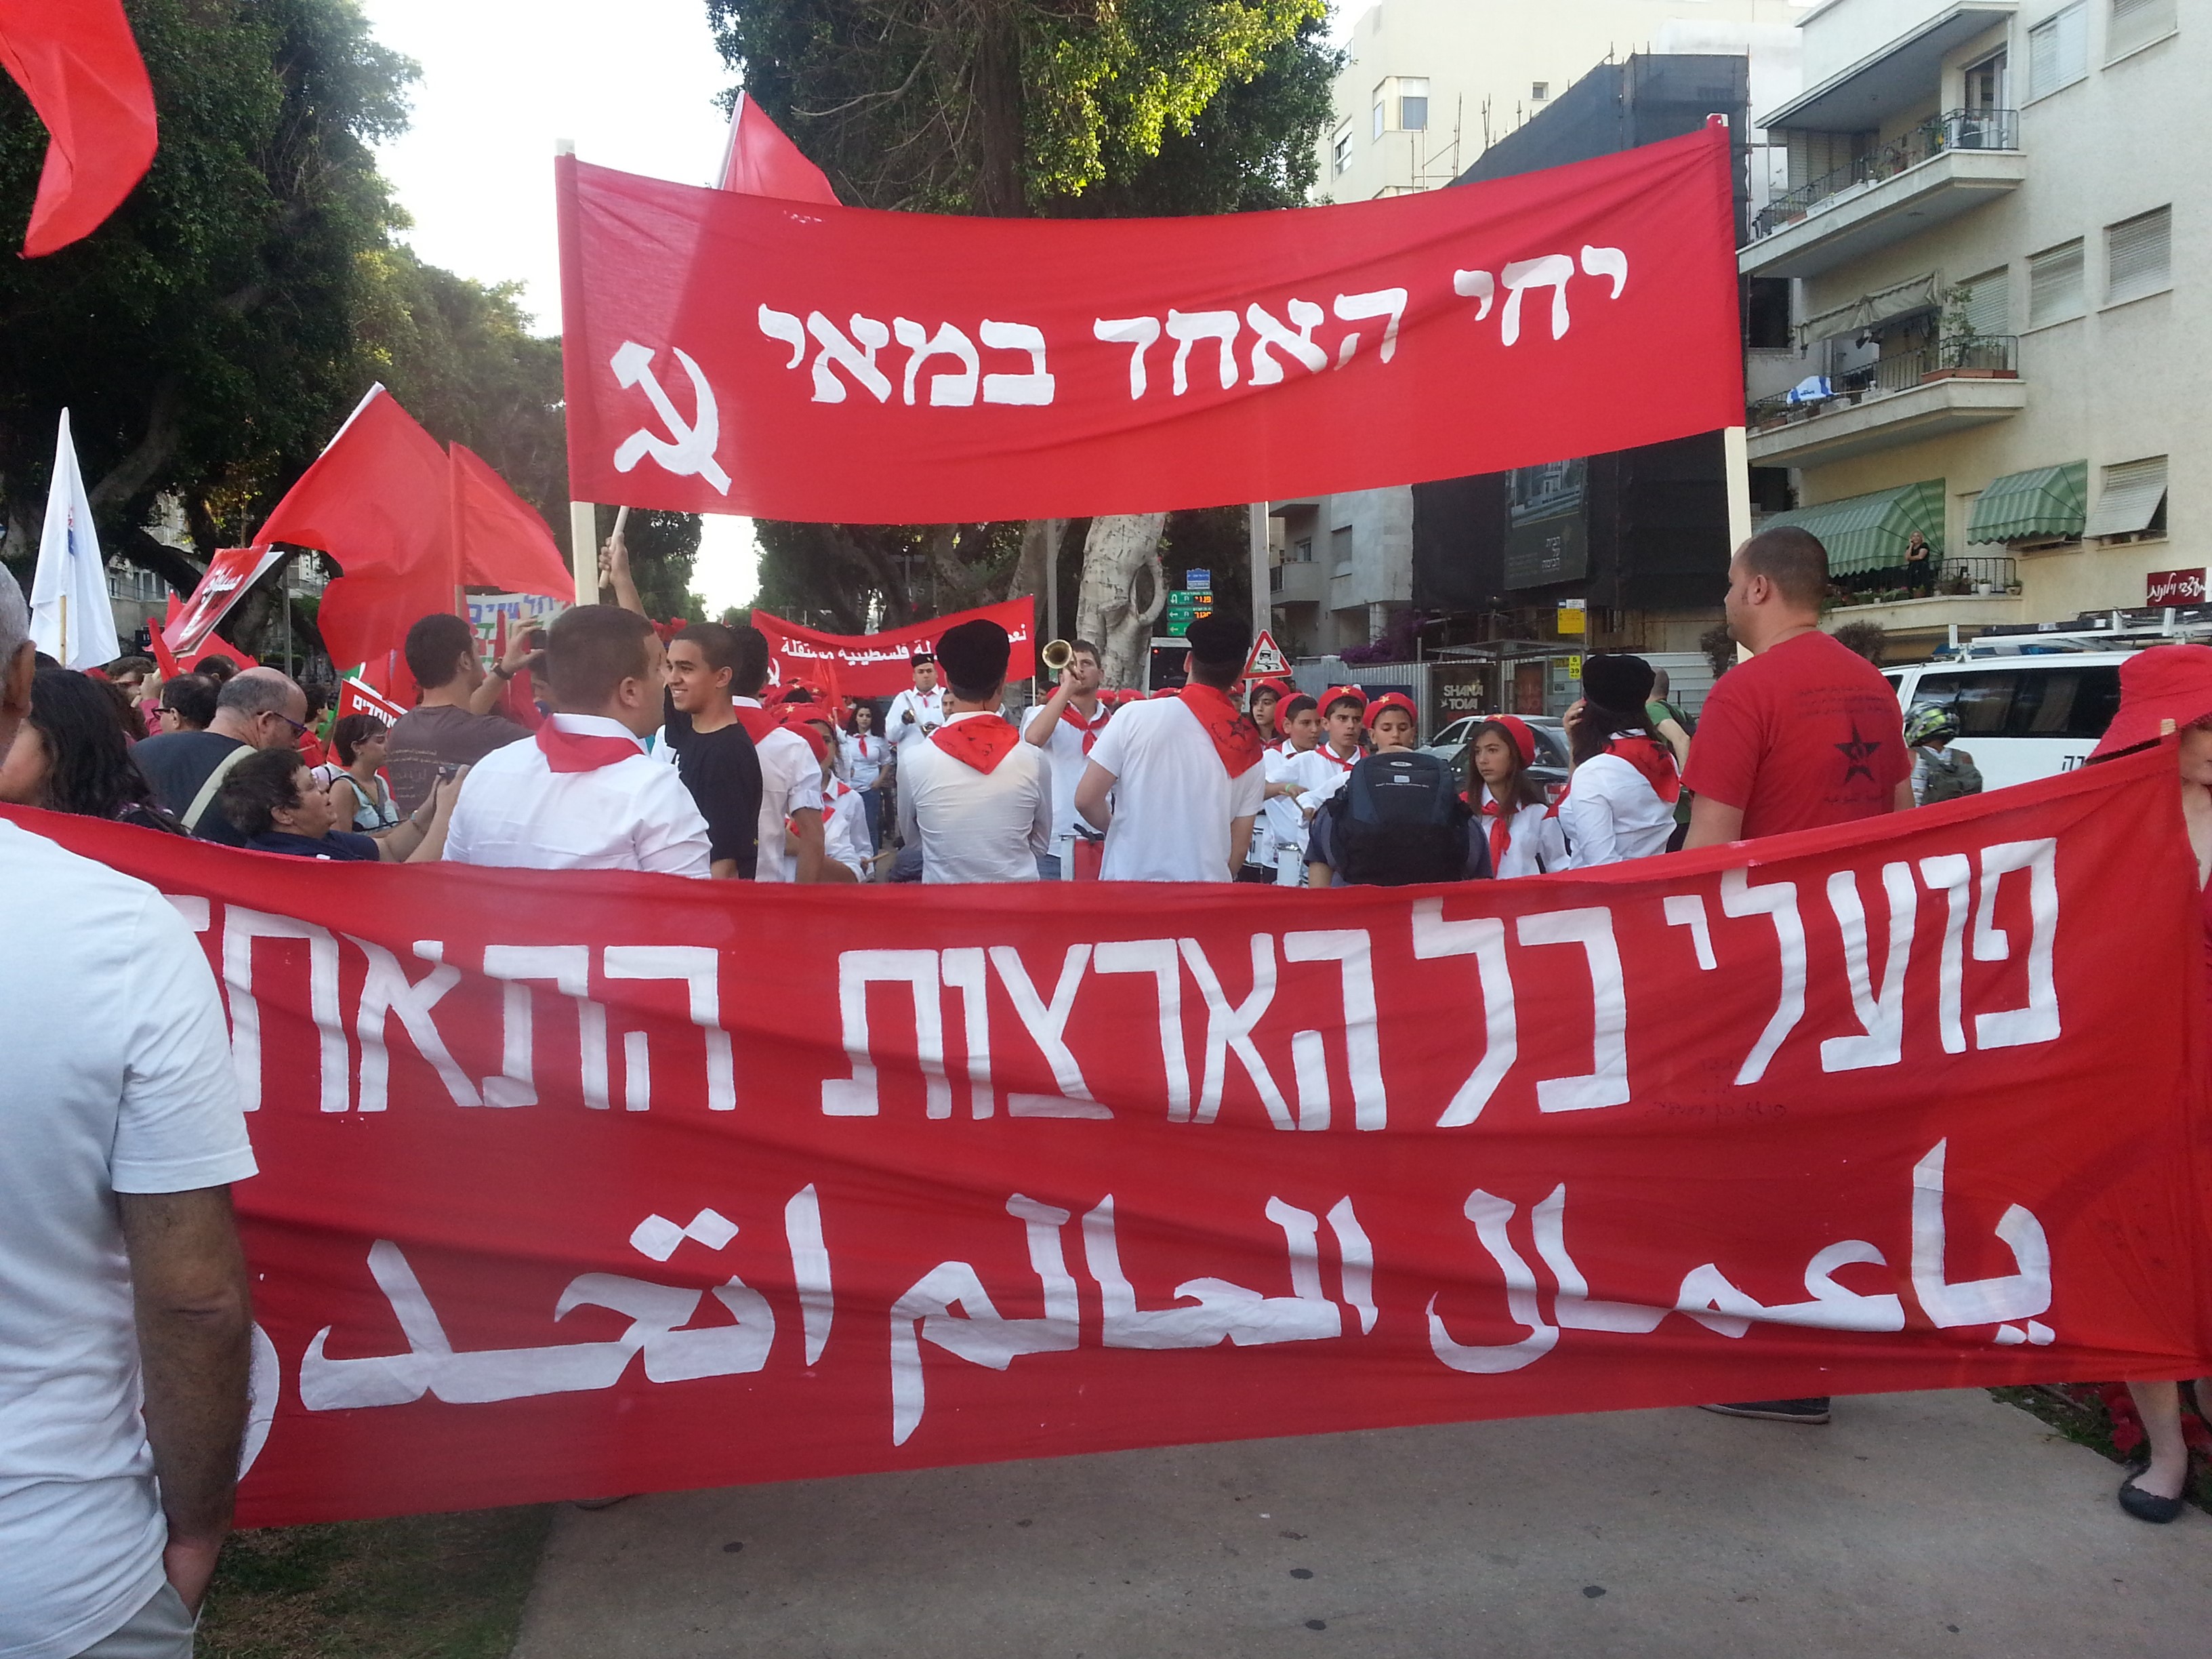 İsrailli ve Filistinli komünistler Kudüs konusunda net